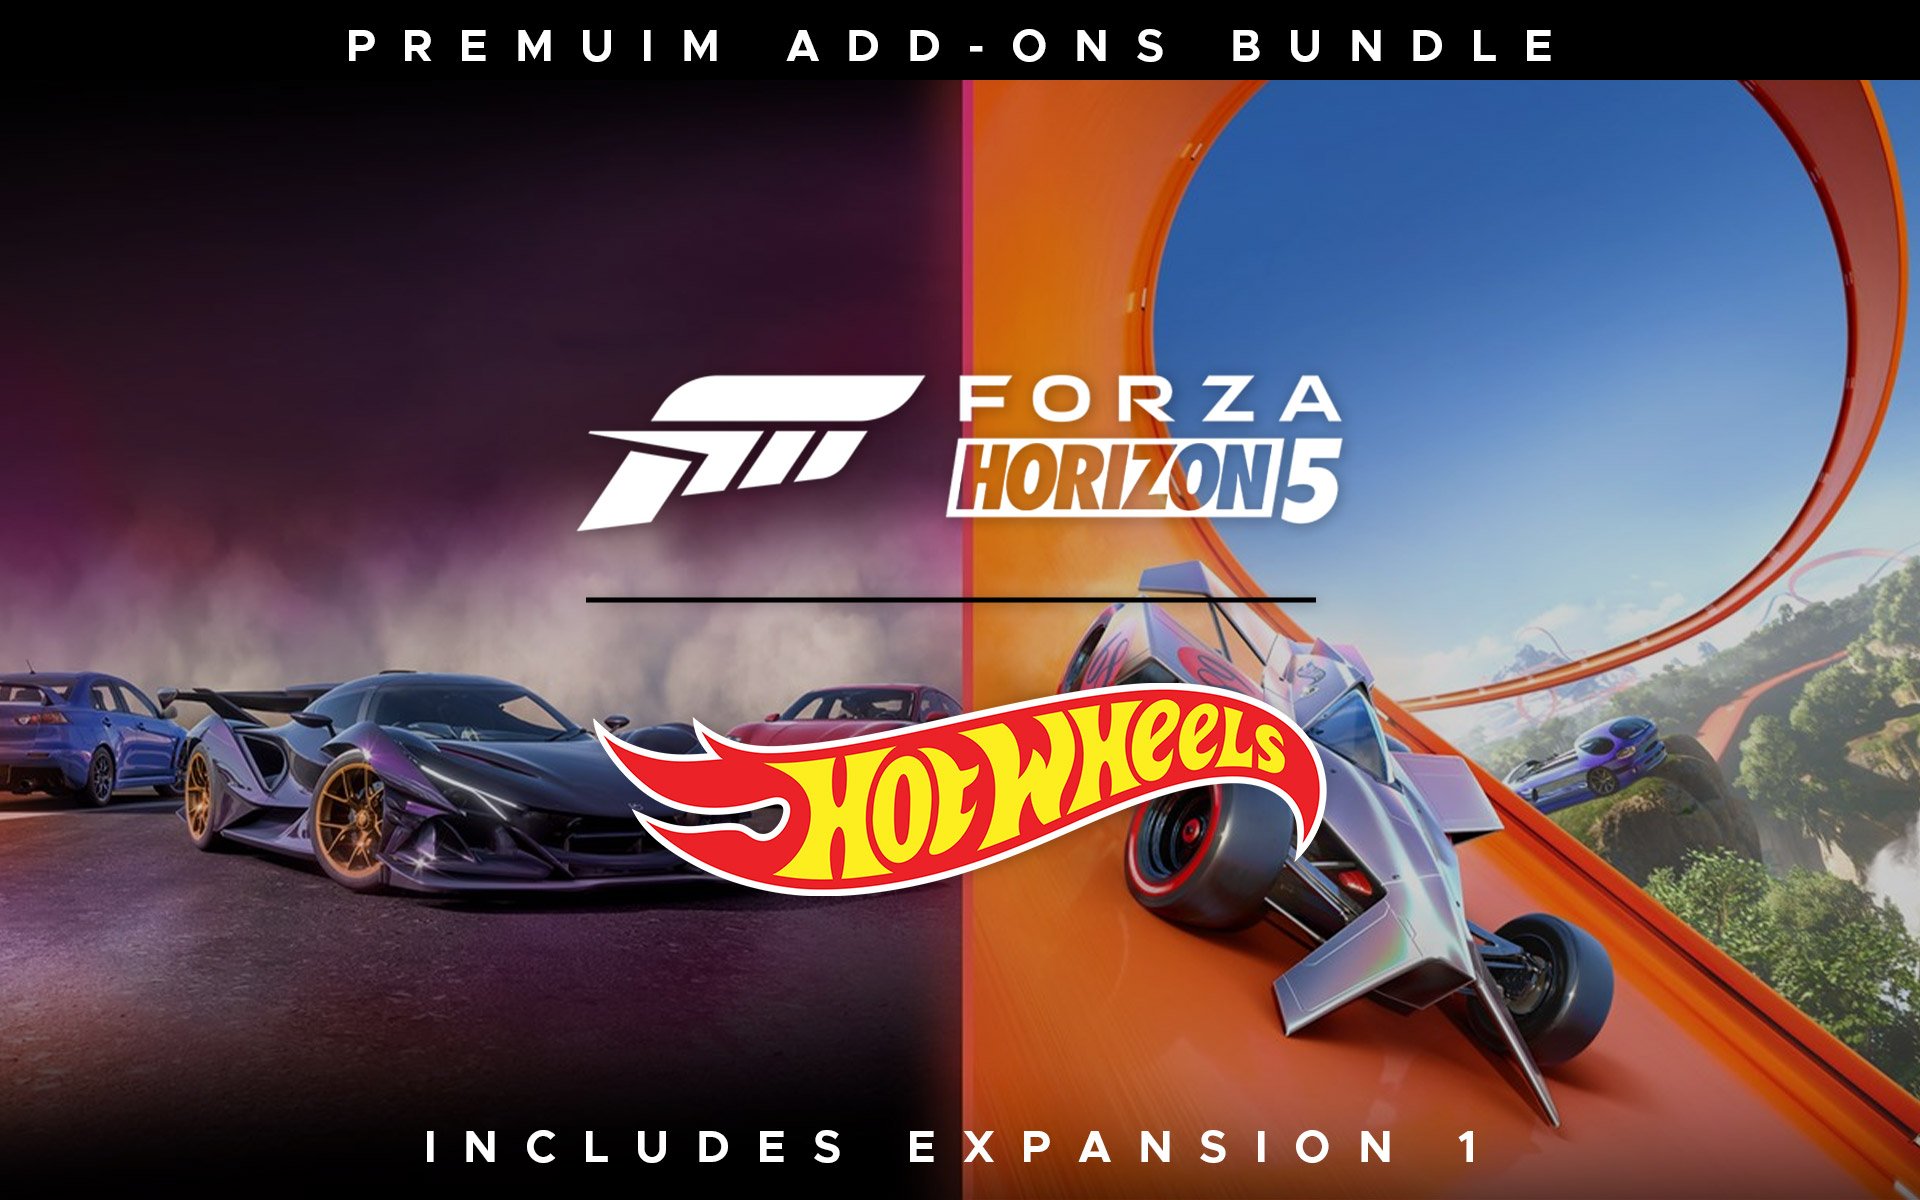 Passe de Carros do Forza Horizon 5 - Xbox Series X, S, Xbox One, Windows 10